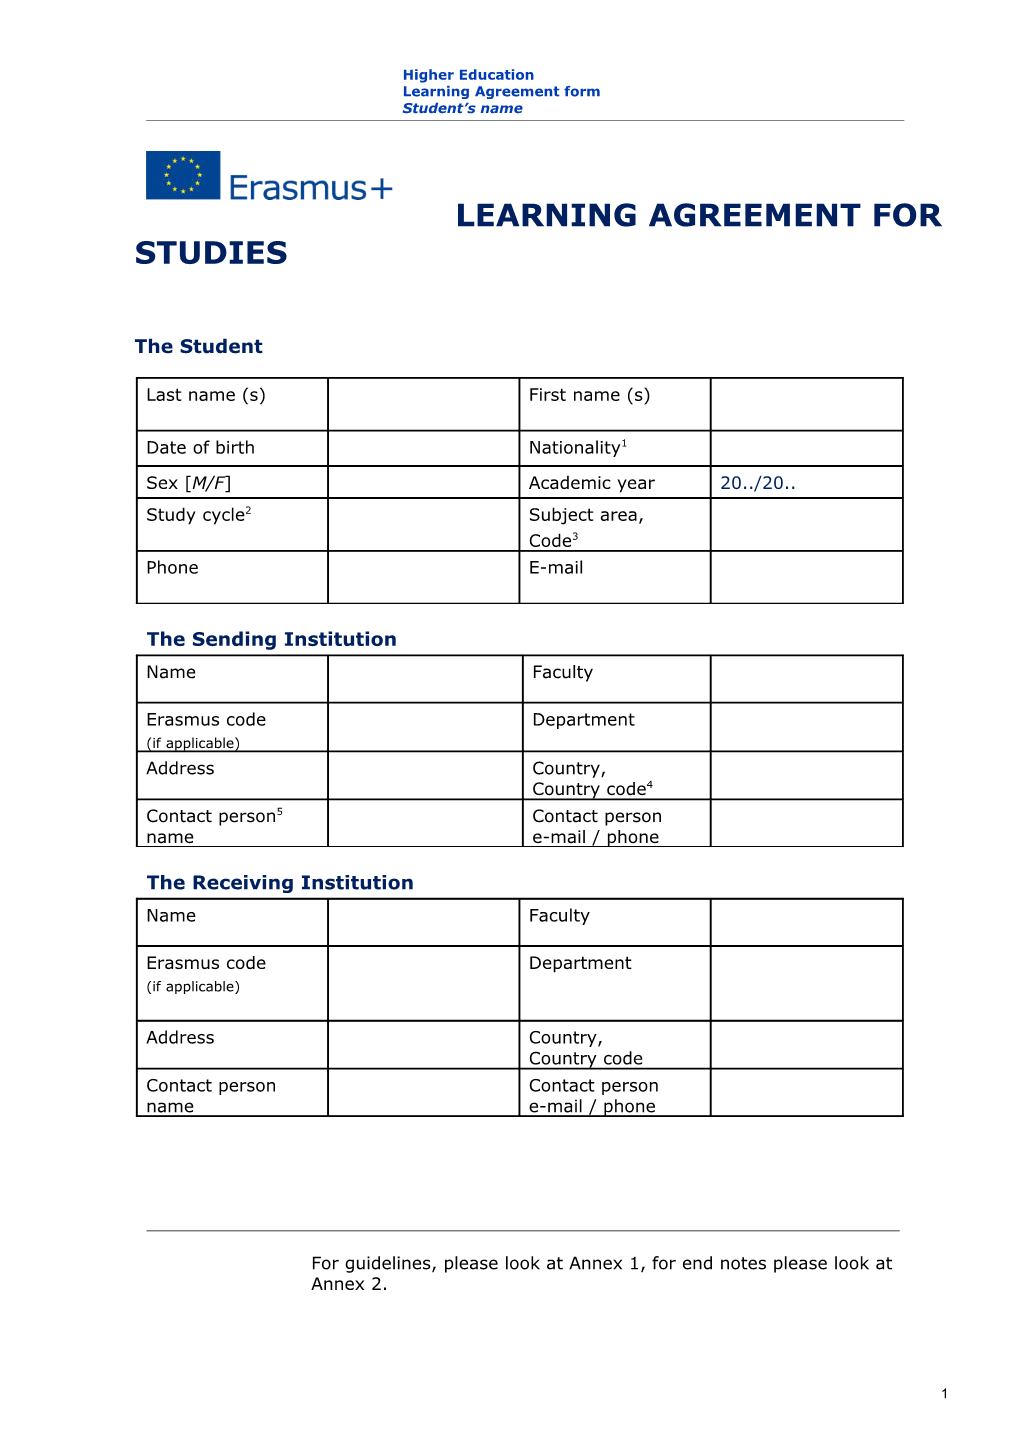 Learning Agreement for Studies s2